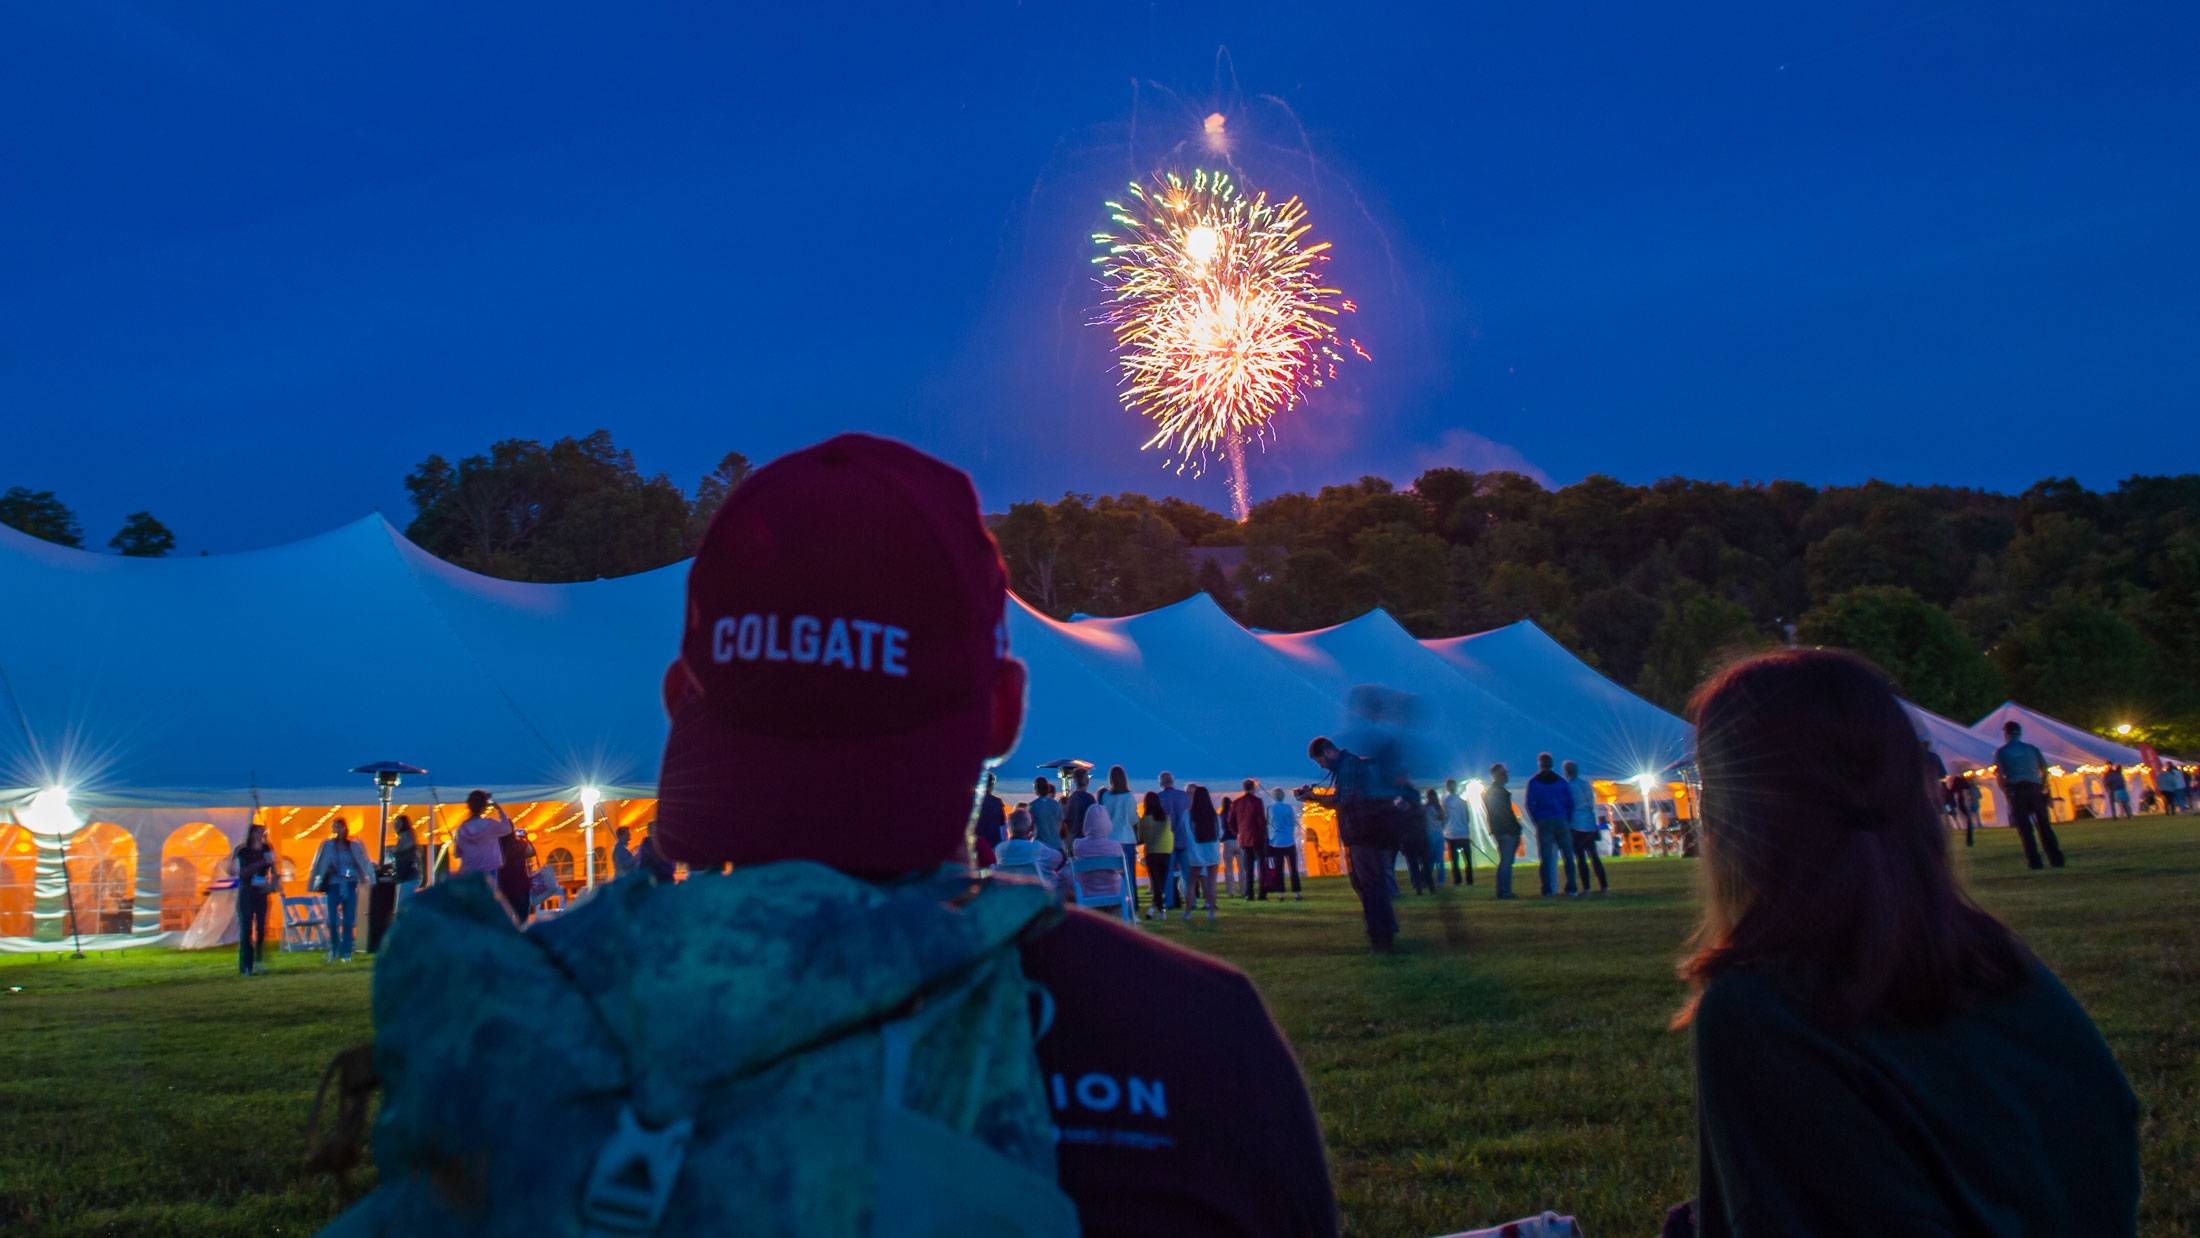 Alumni watch fireworks over reunion tents